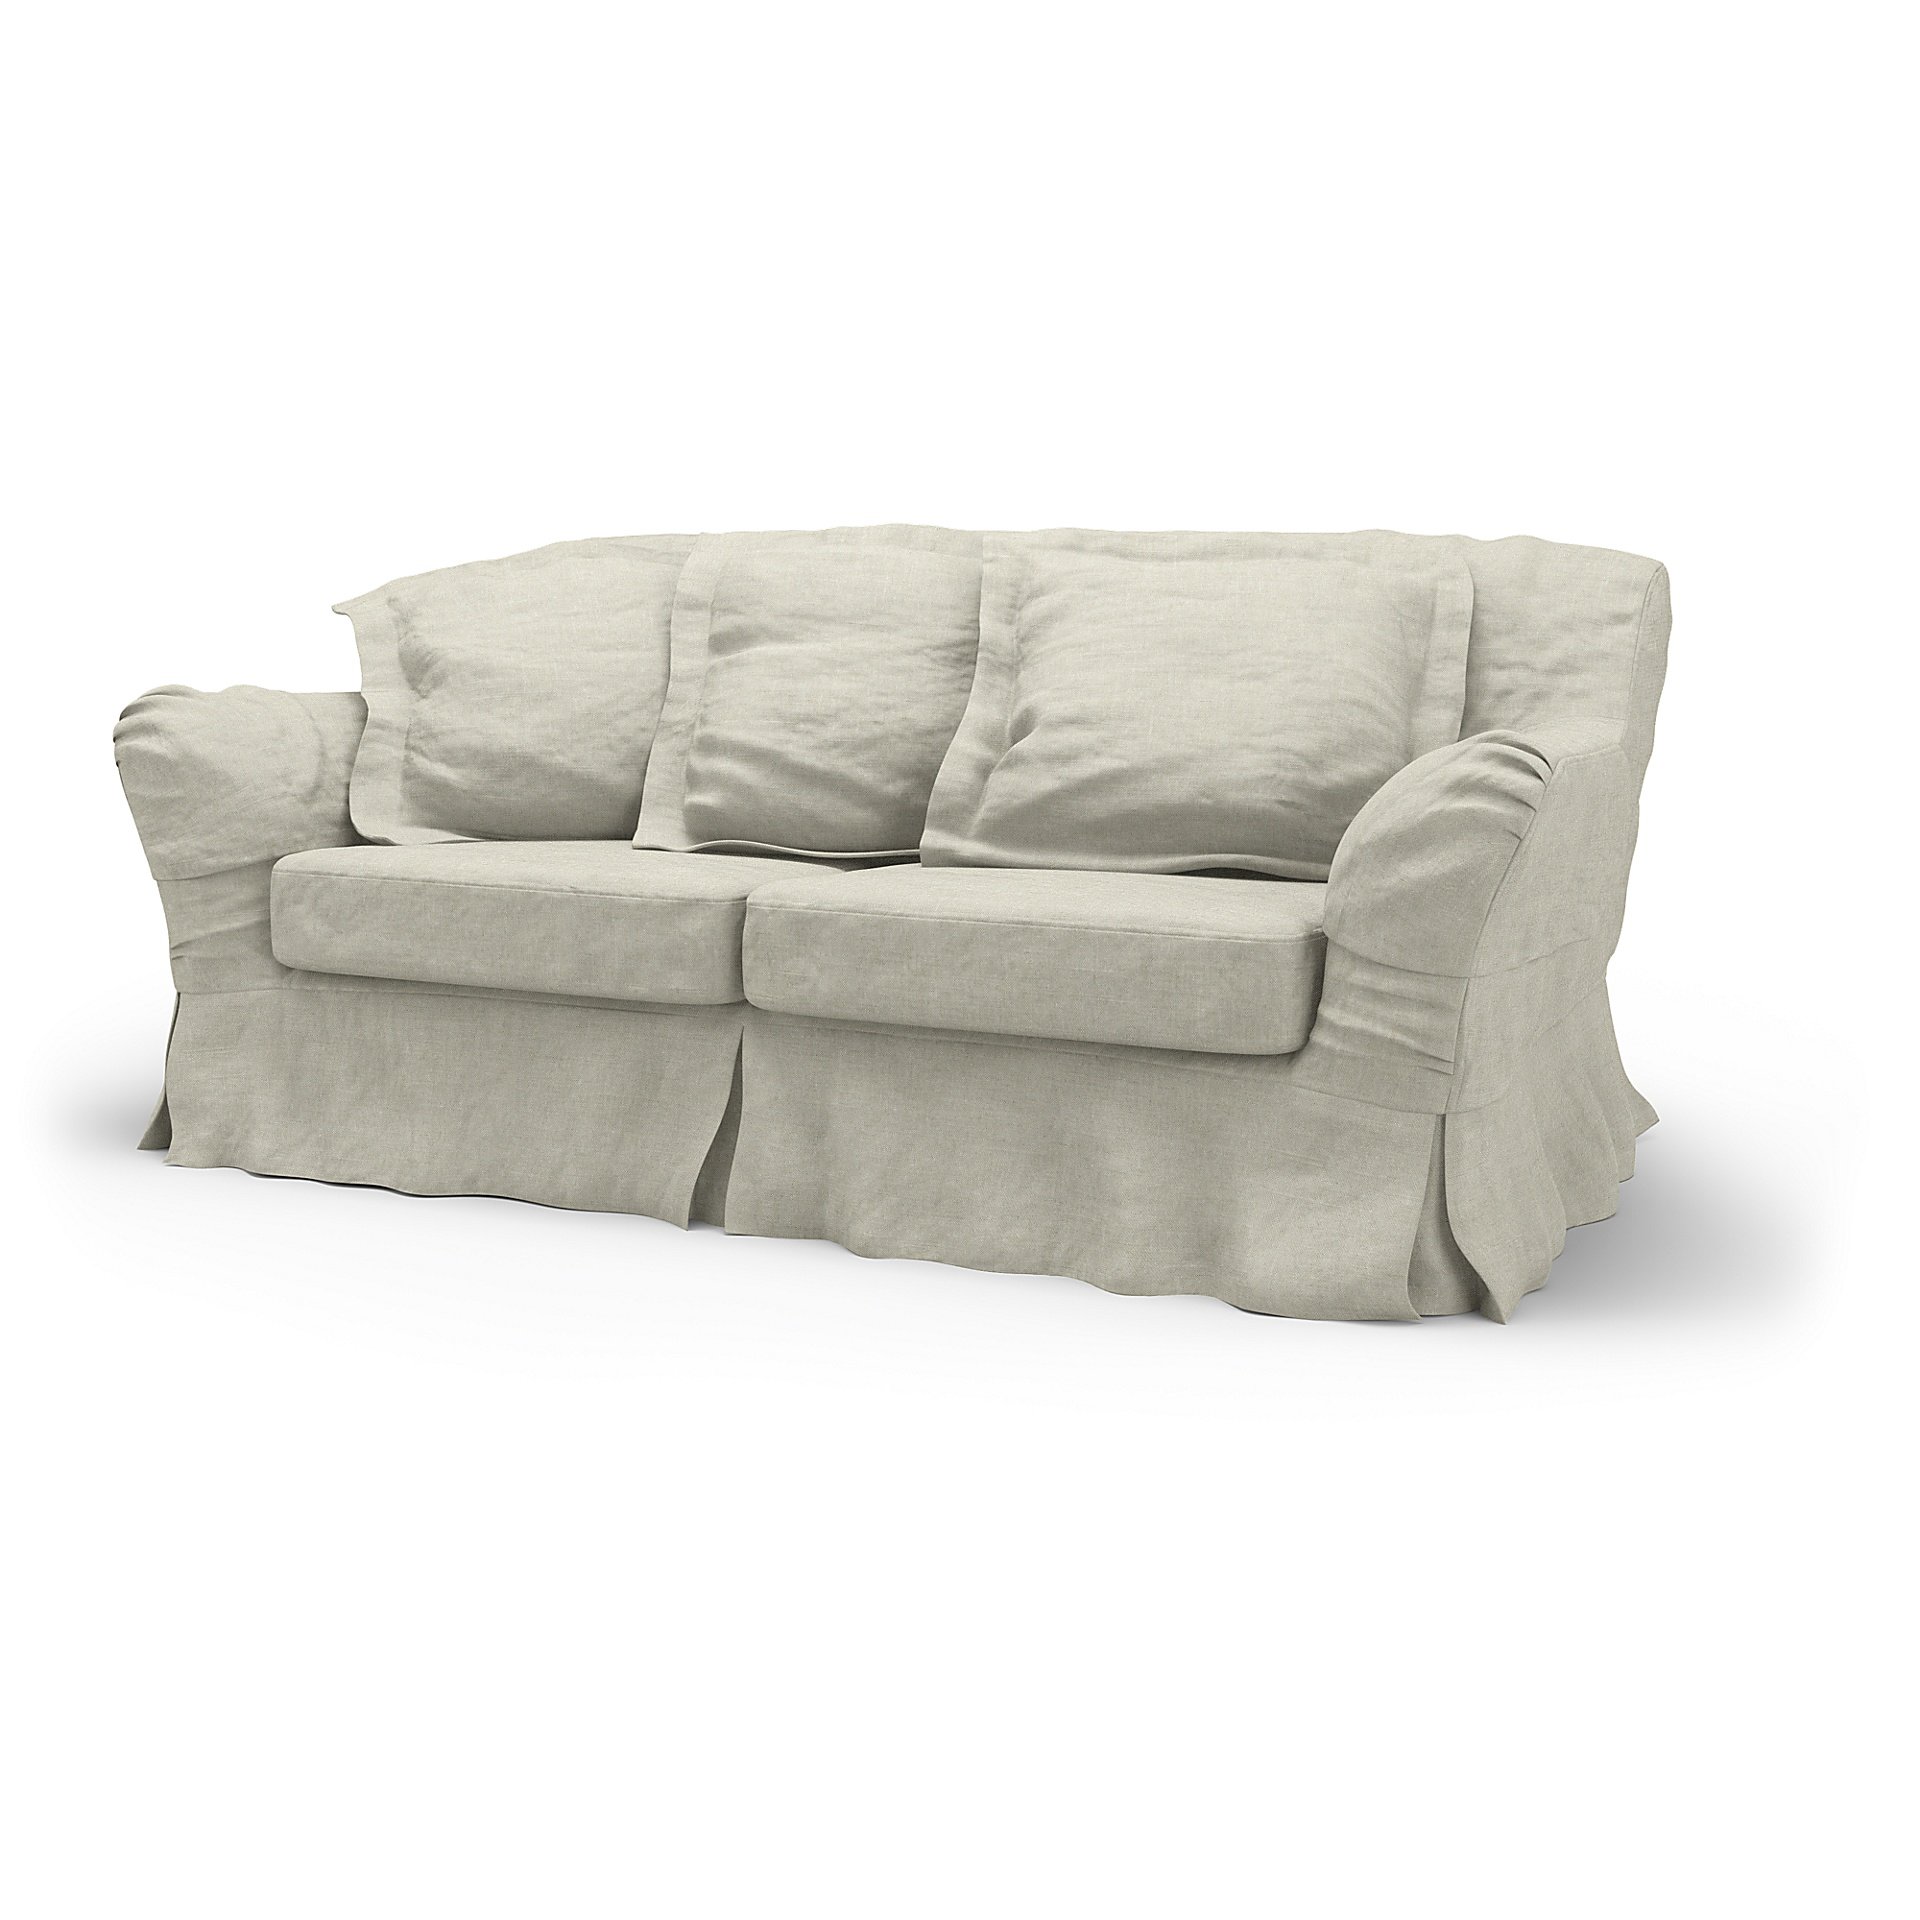 IKEA - Tomelilla 2 Seater Sofa Cover, Natural, Linen - Bemz